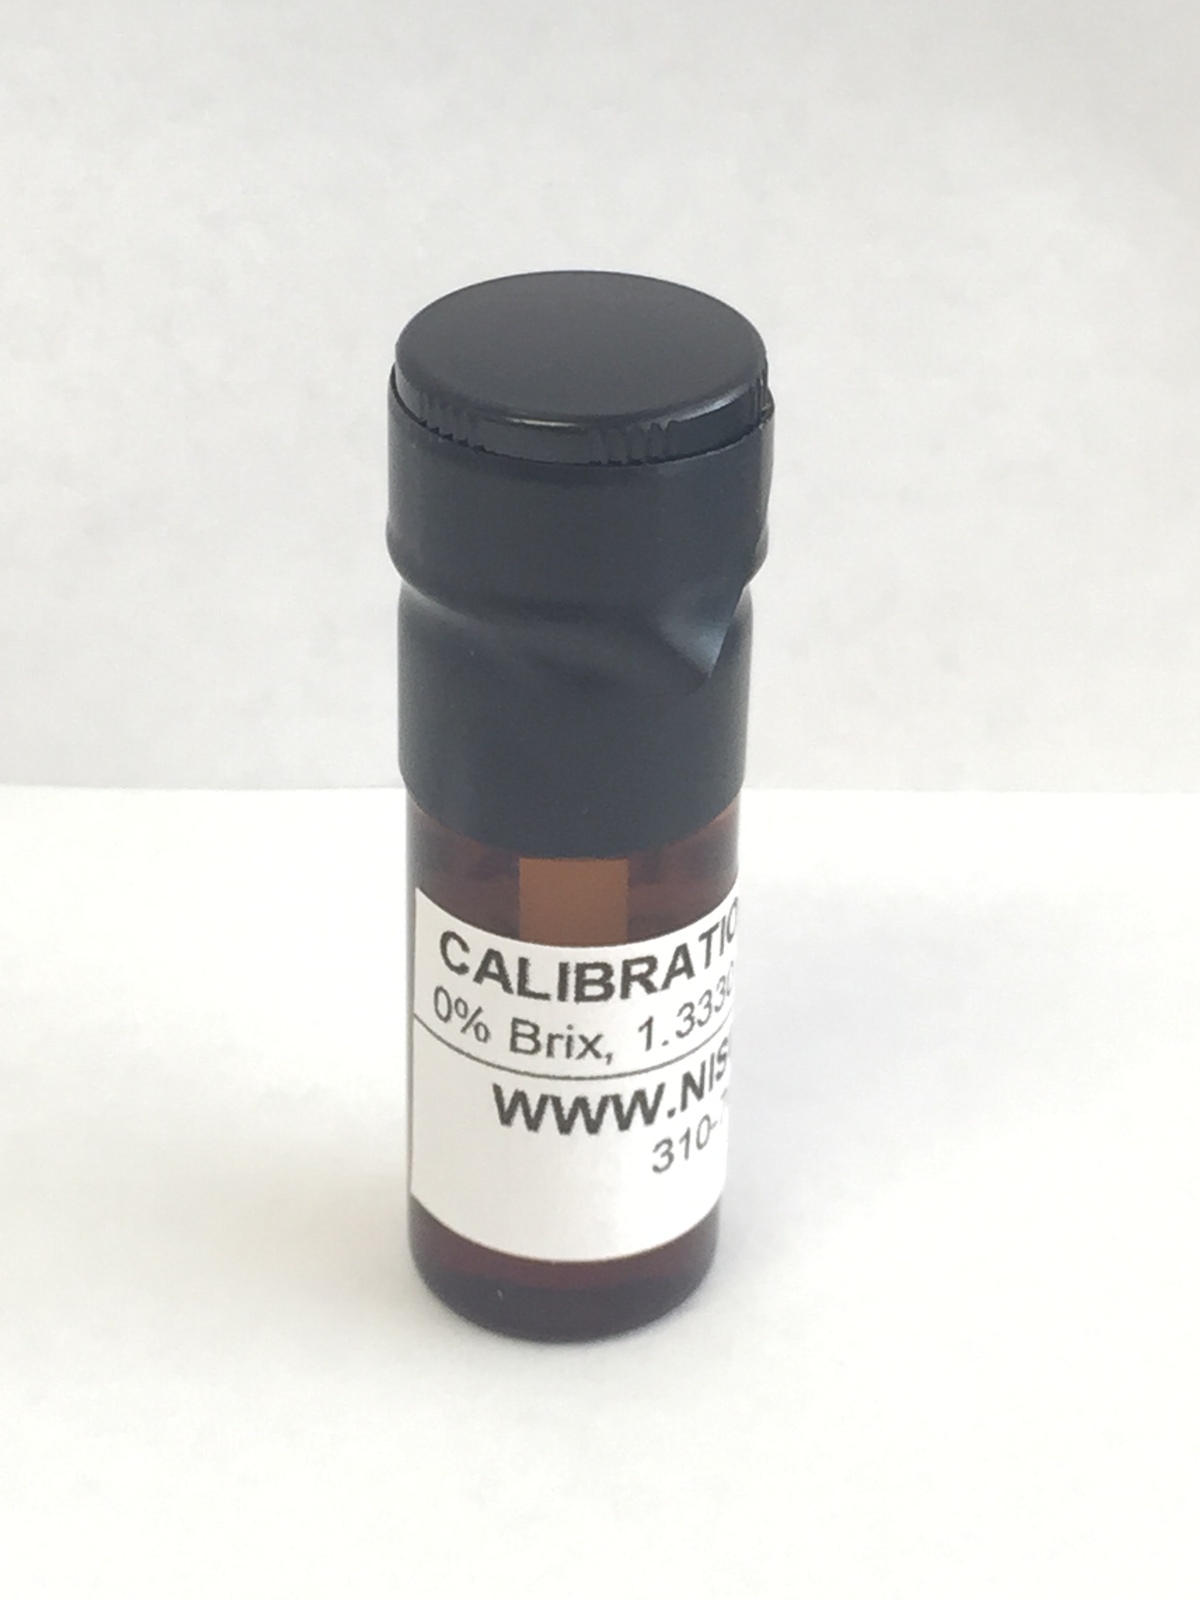 $8.85 FREE S&H Calibration Fluid Liquid Brix Salinity Clinical Refractometer